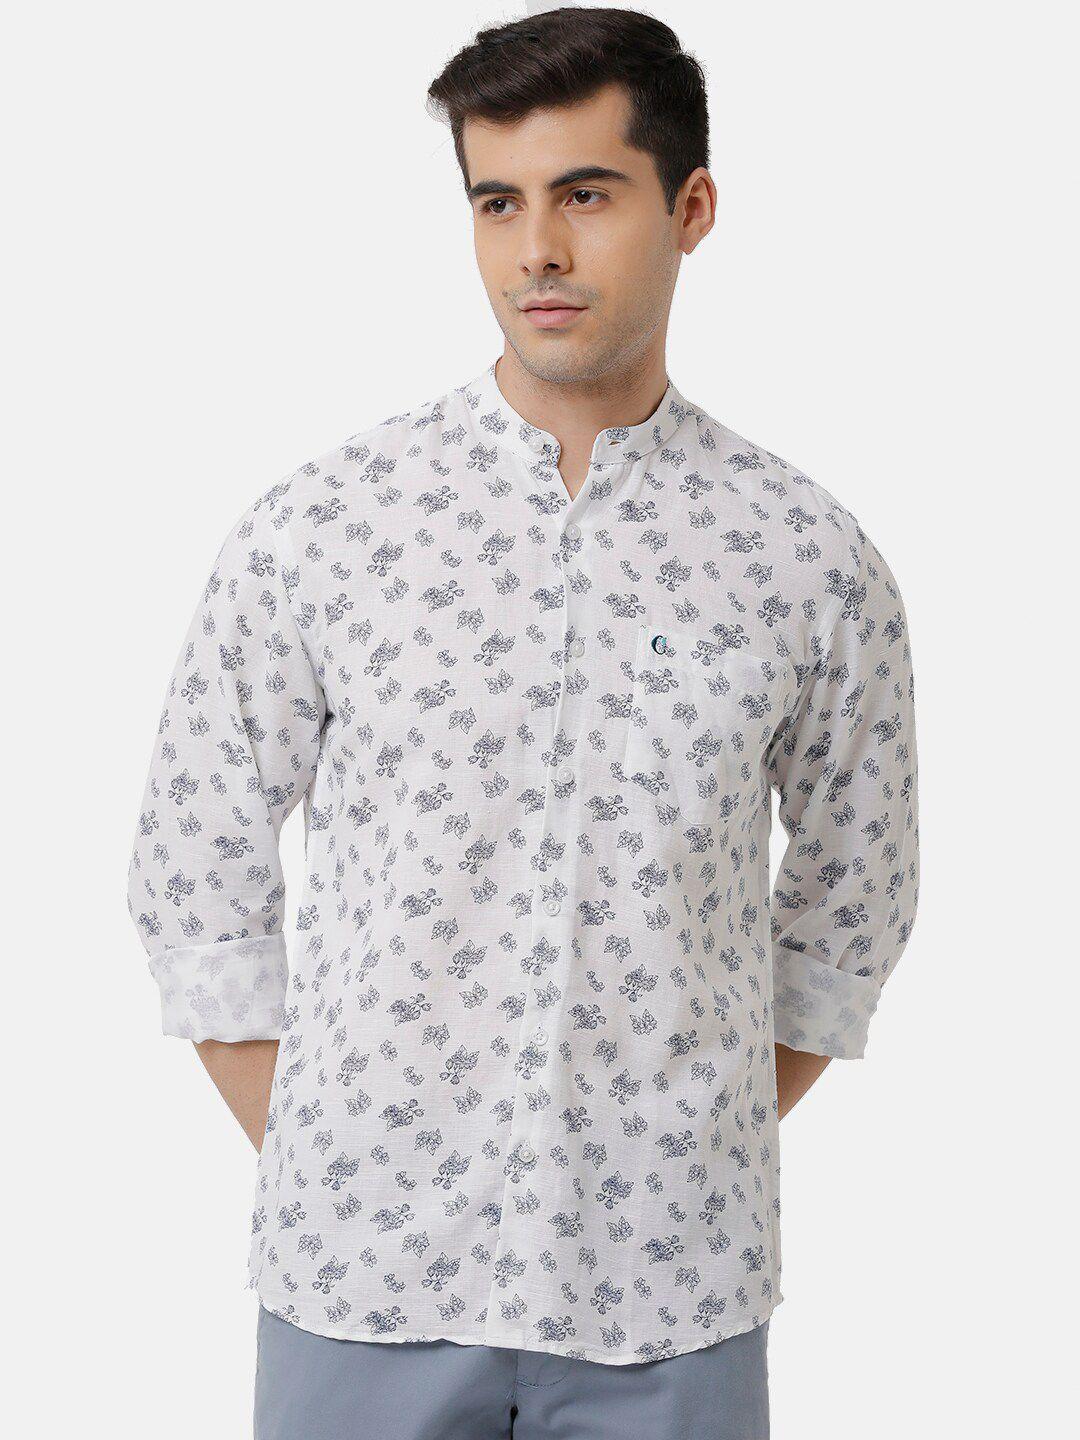 cavallo-by-linen-club-men-white-floral-printed-linen-cotton-casual-shirt